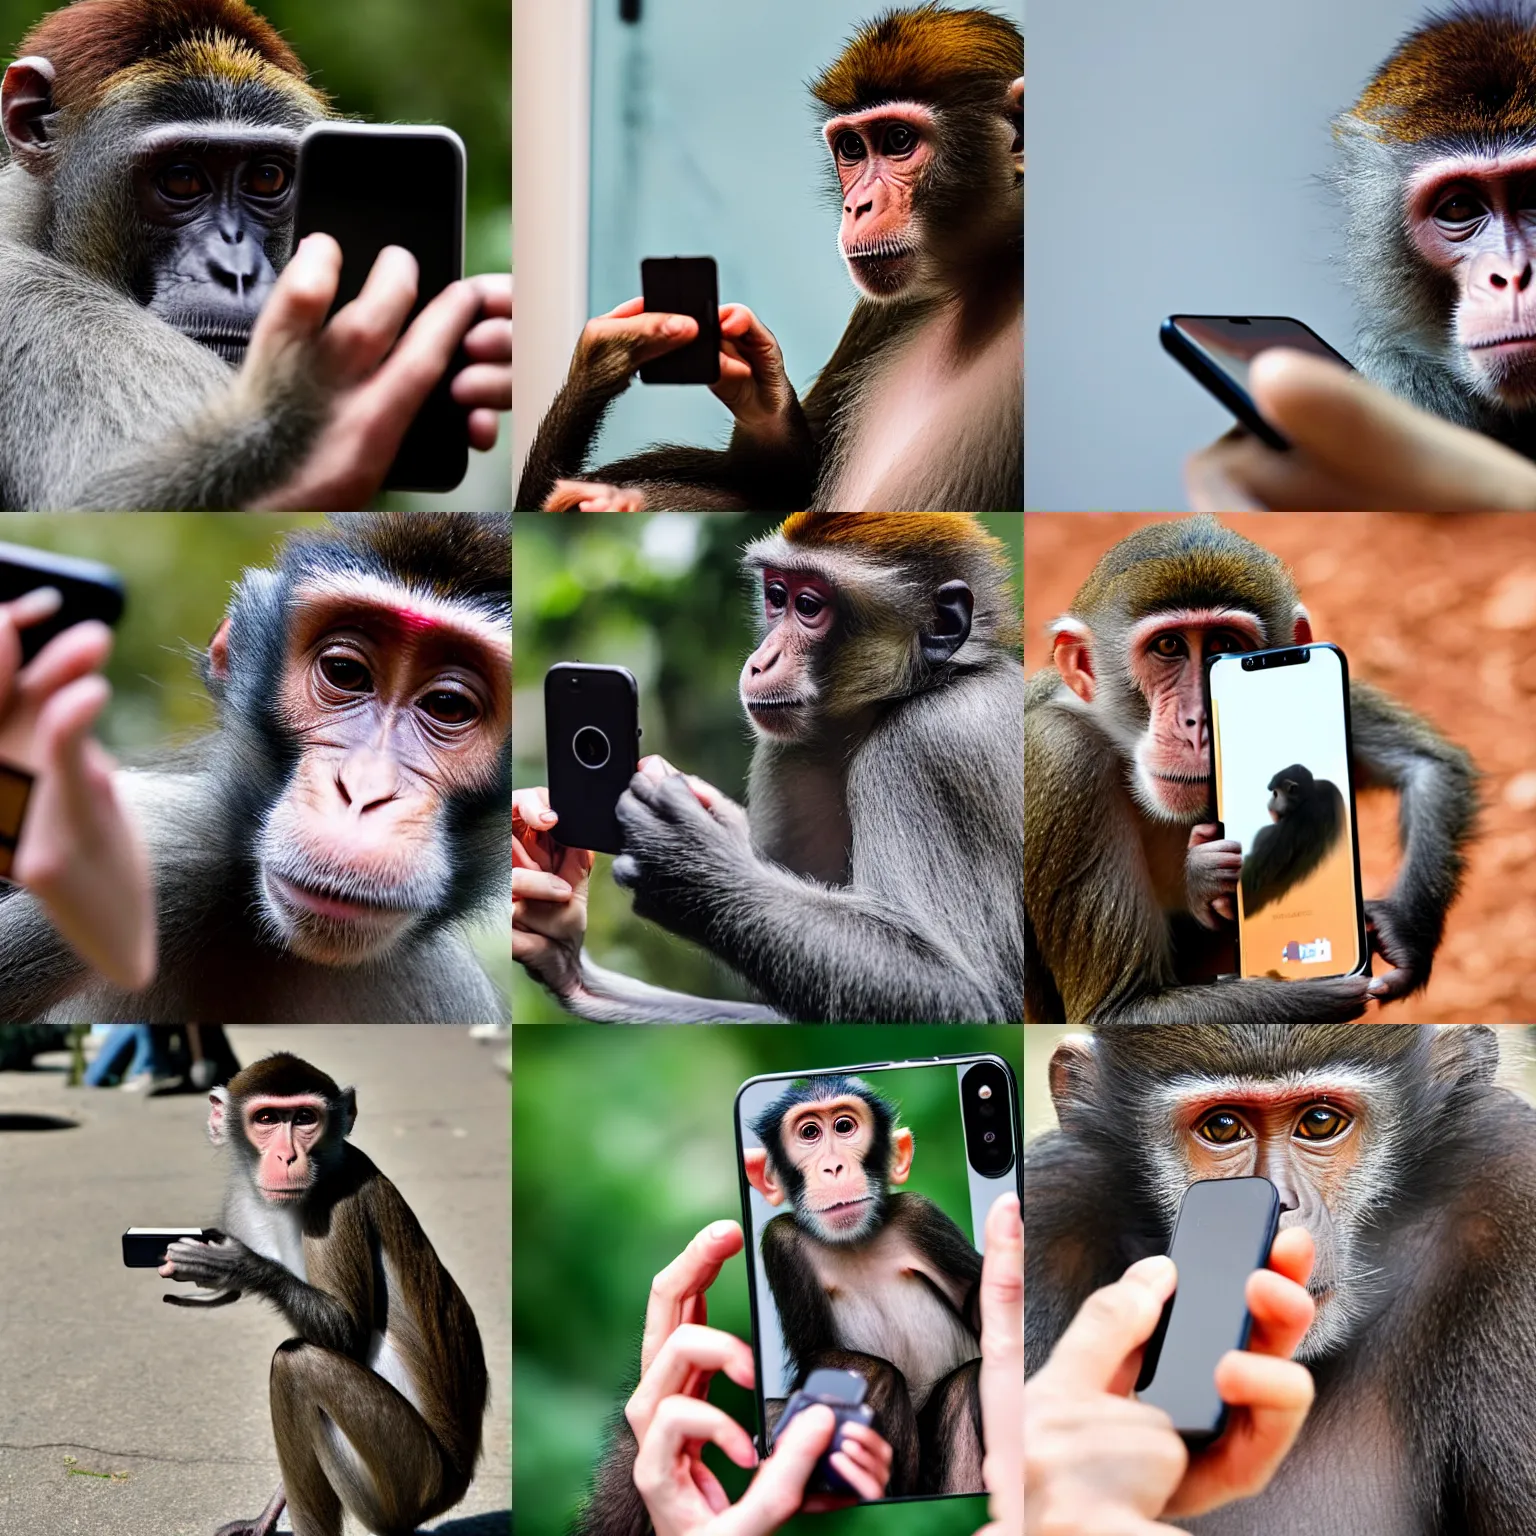 Beauty of Nature - Close enough ( girl vs monkey selfie) | Facebook